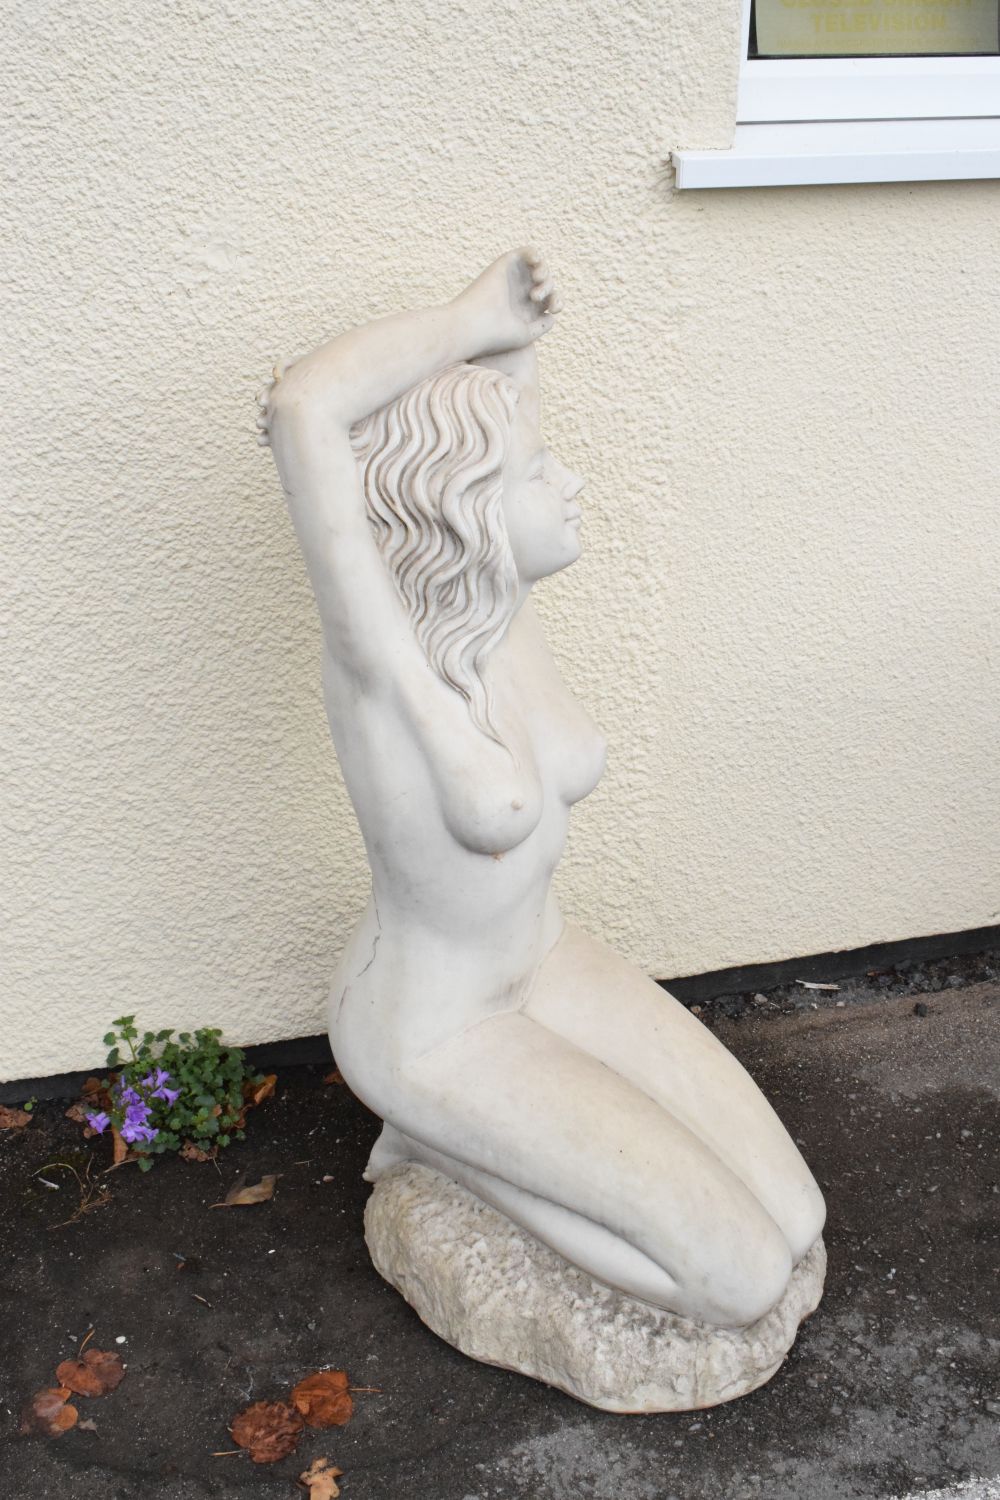 Garden Ornament - Fibreglass model of a kneeling naked maiden, 102cmhigh - Image 2 of 3